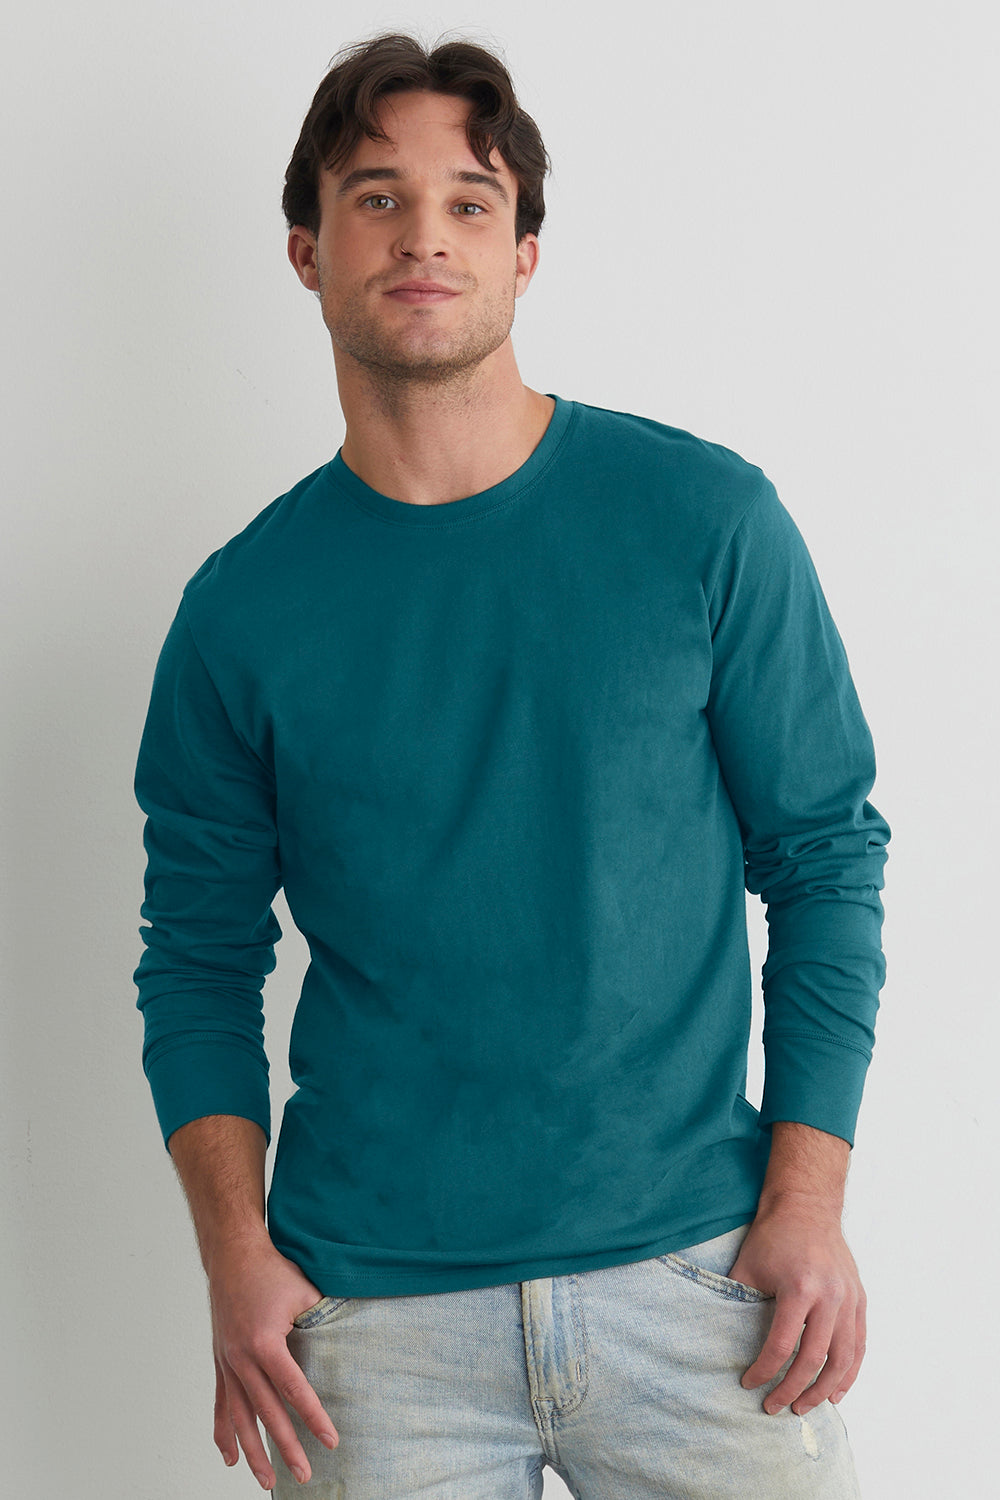 Men's Organic All-Cotton Long Sleeve Crew Neck T-Shirt - Fair Indigo, Size M / Deep Teal